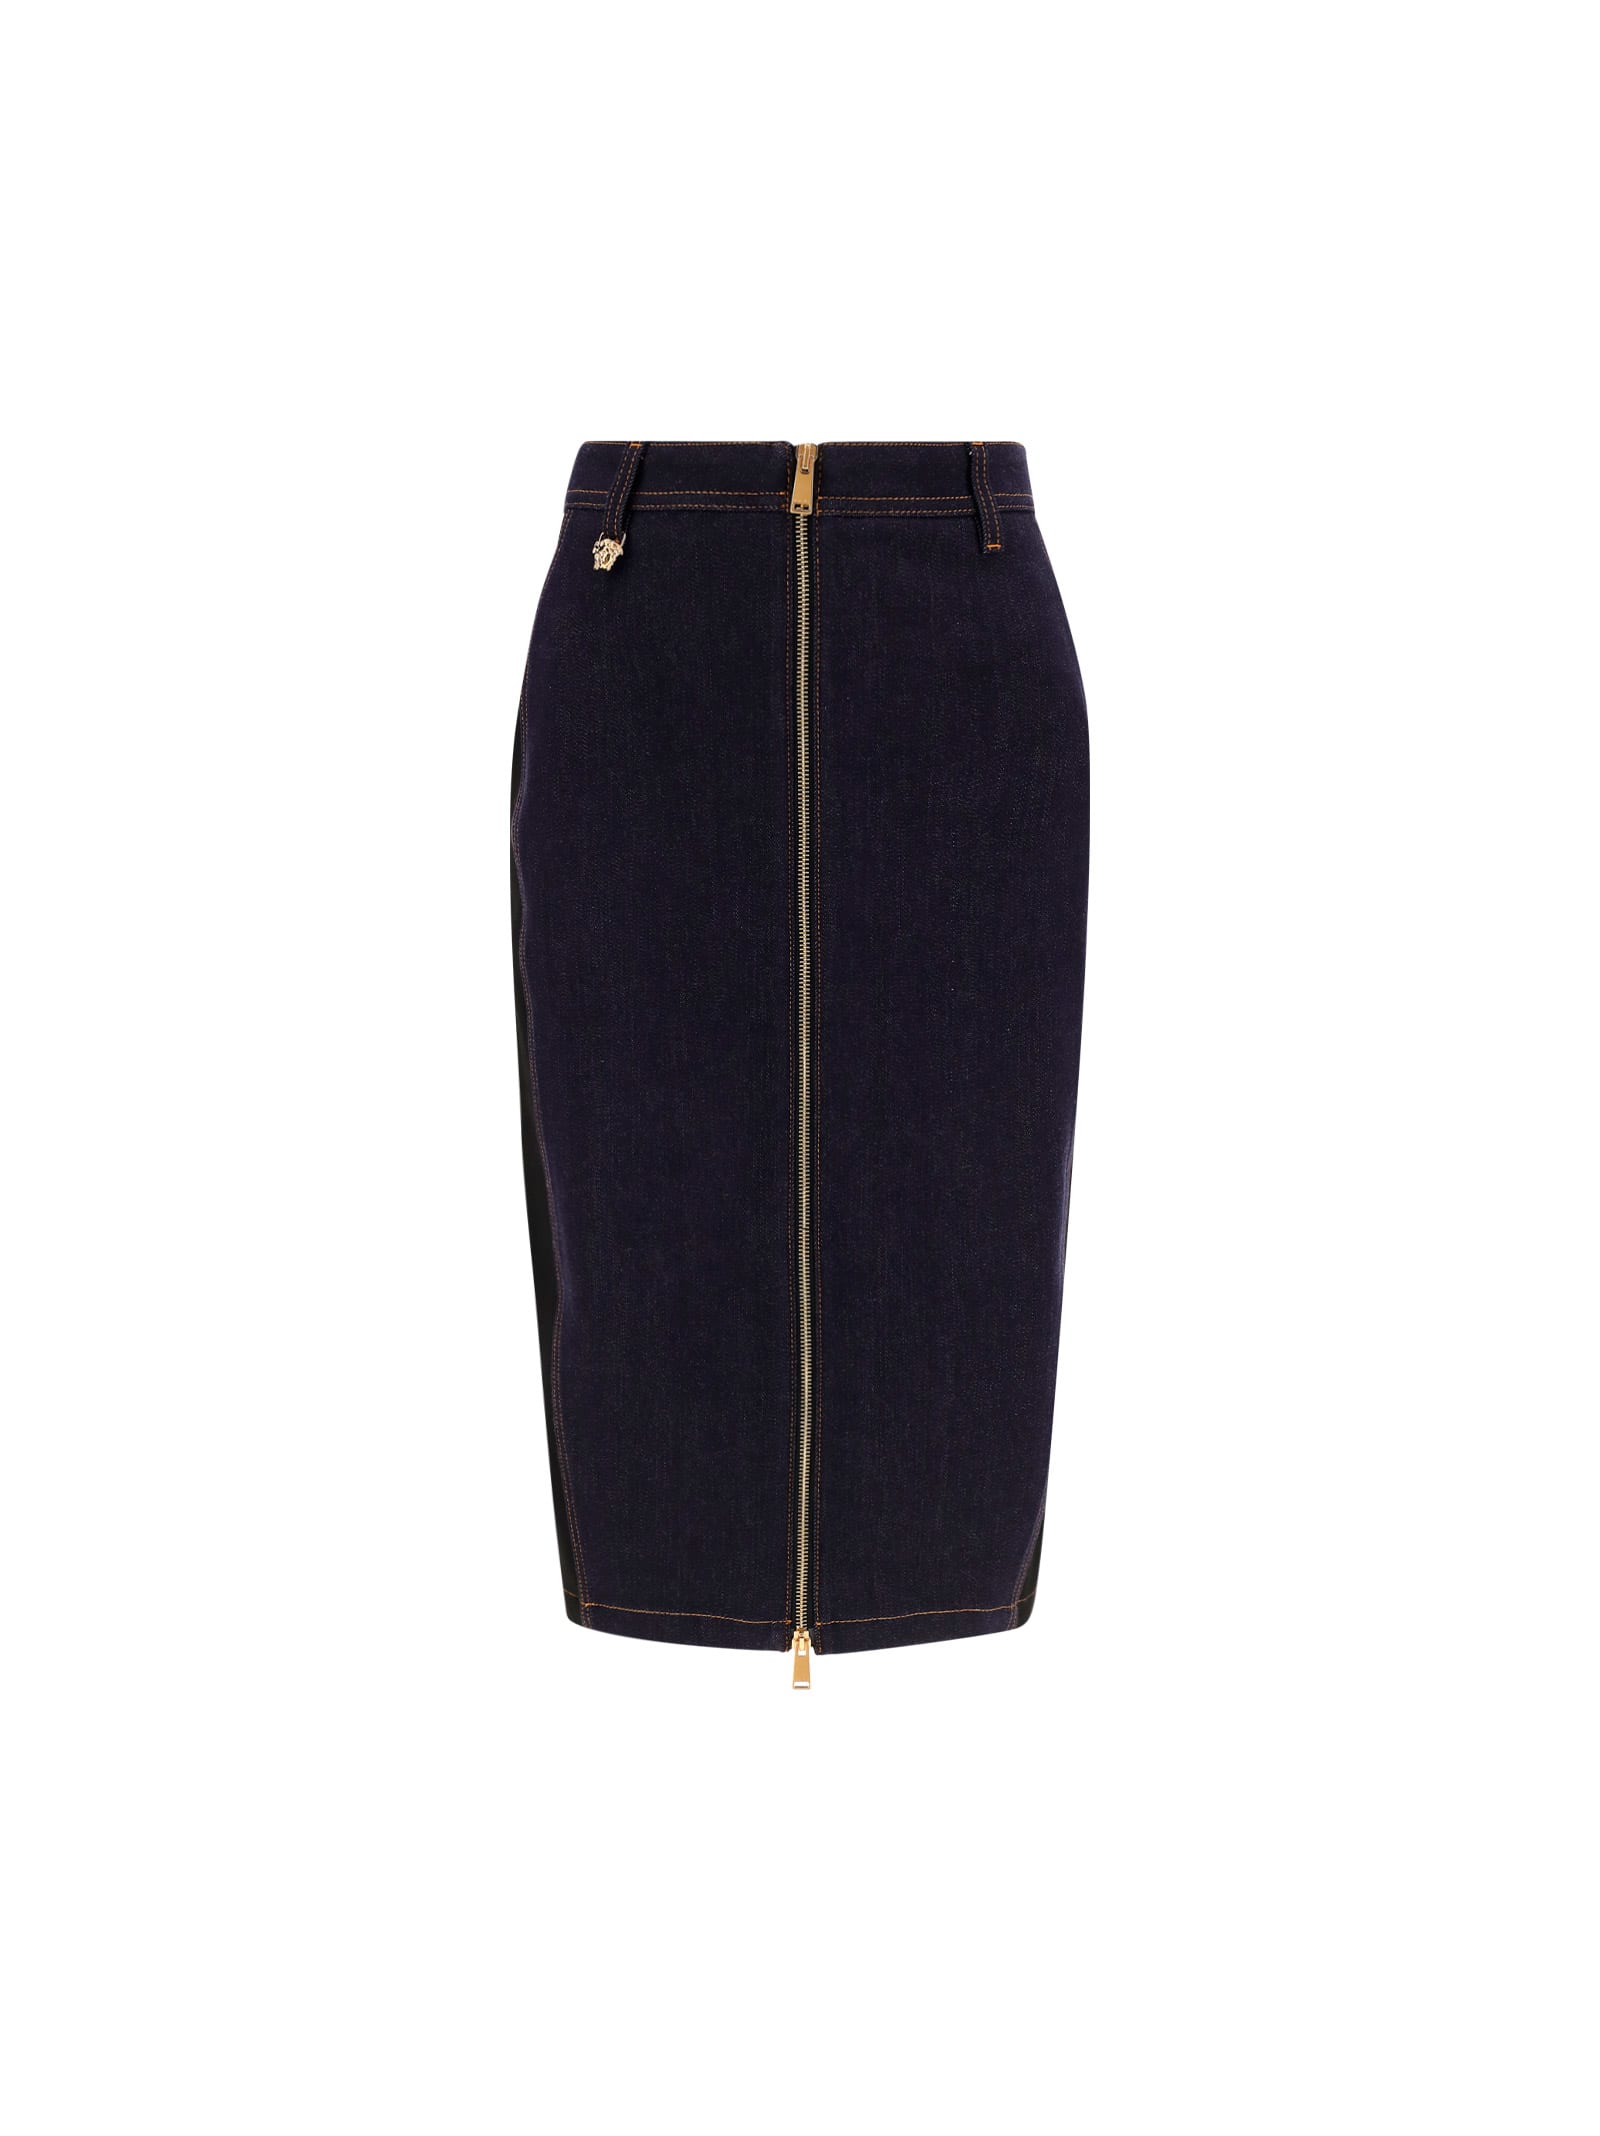 Versace Denim Skirt